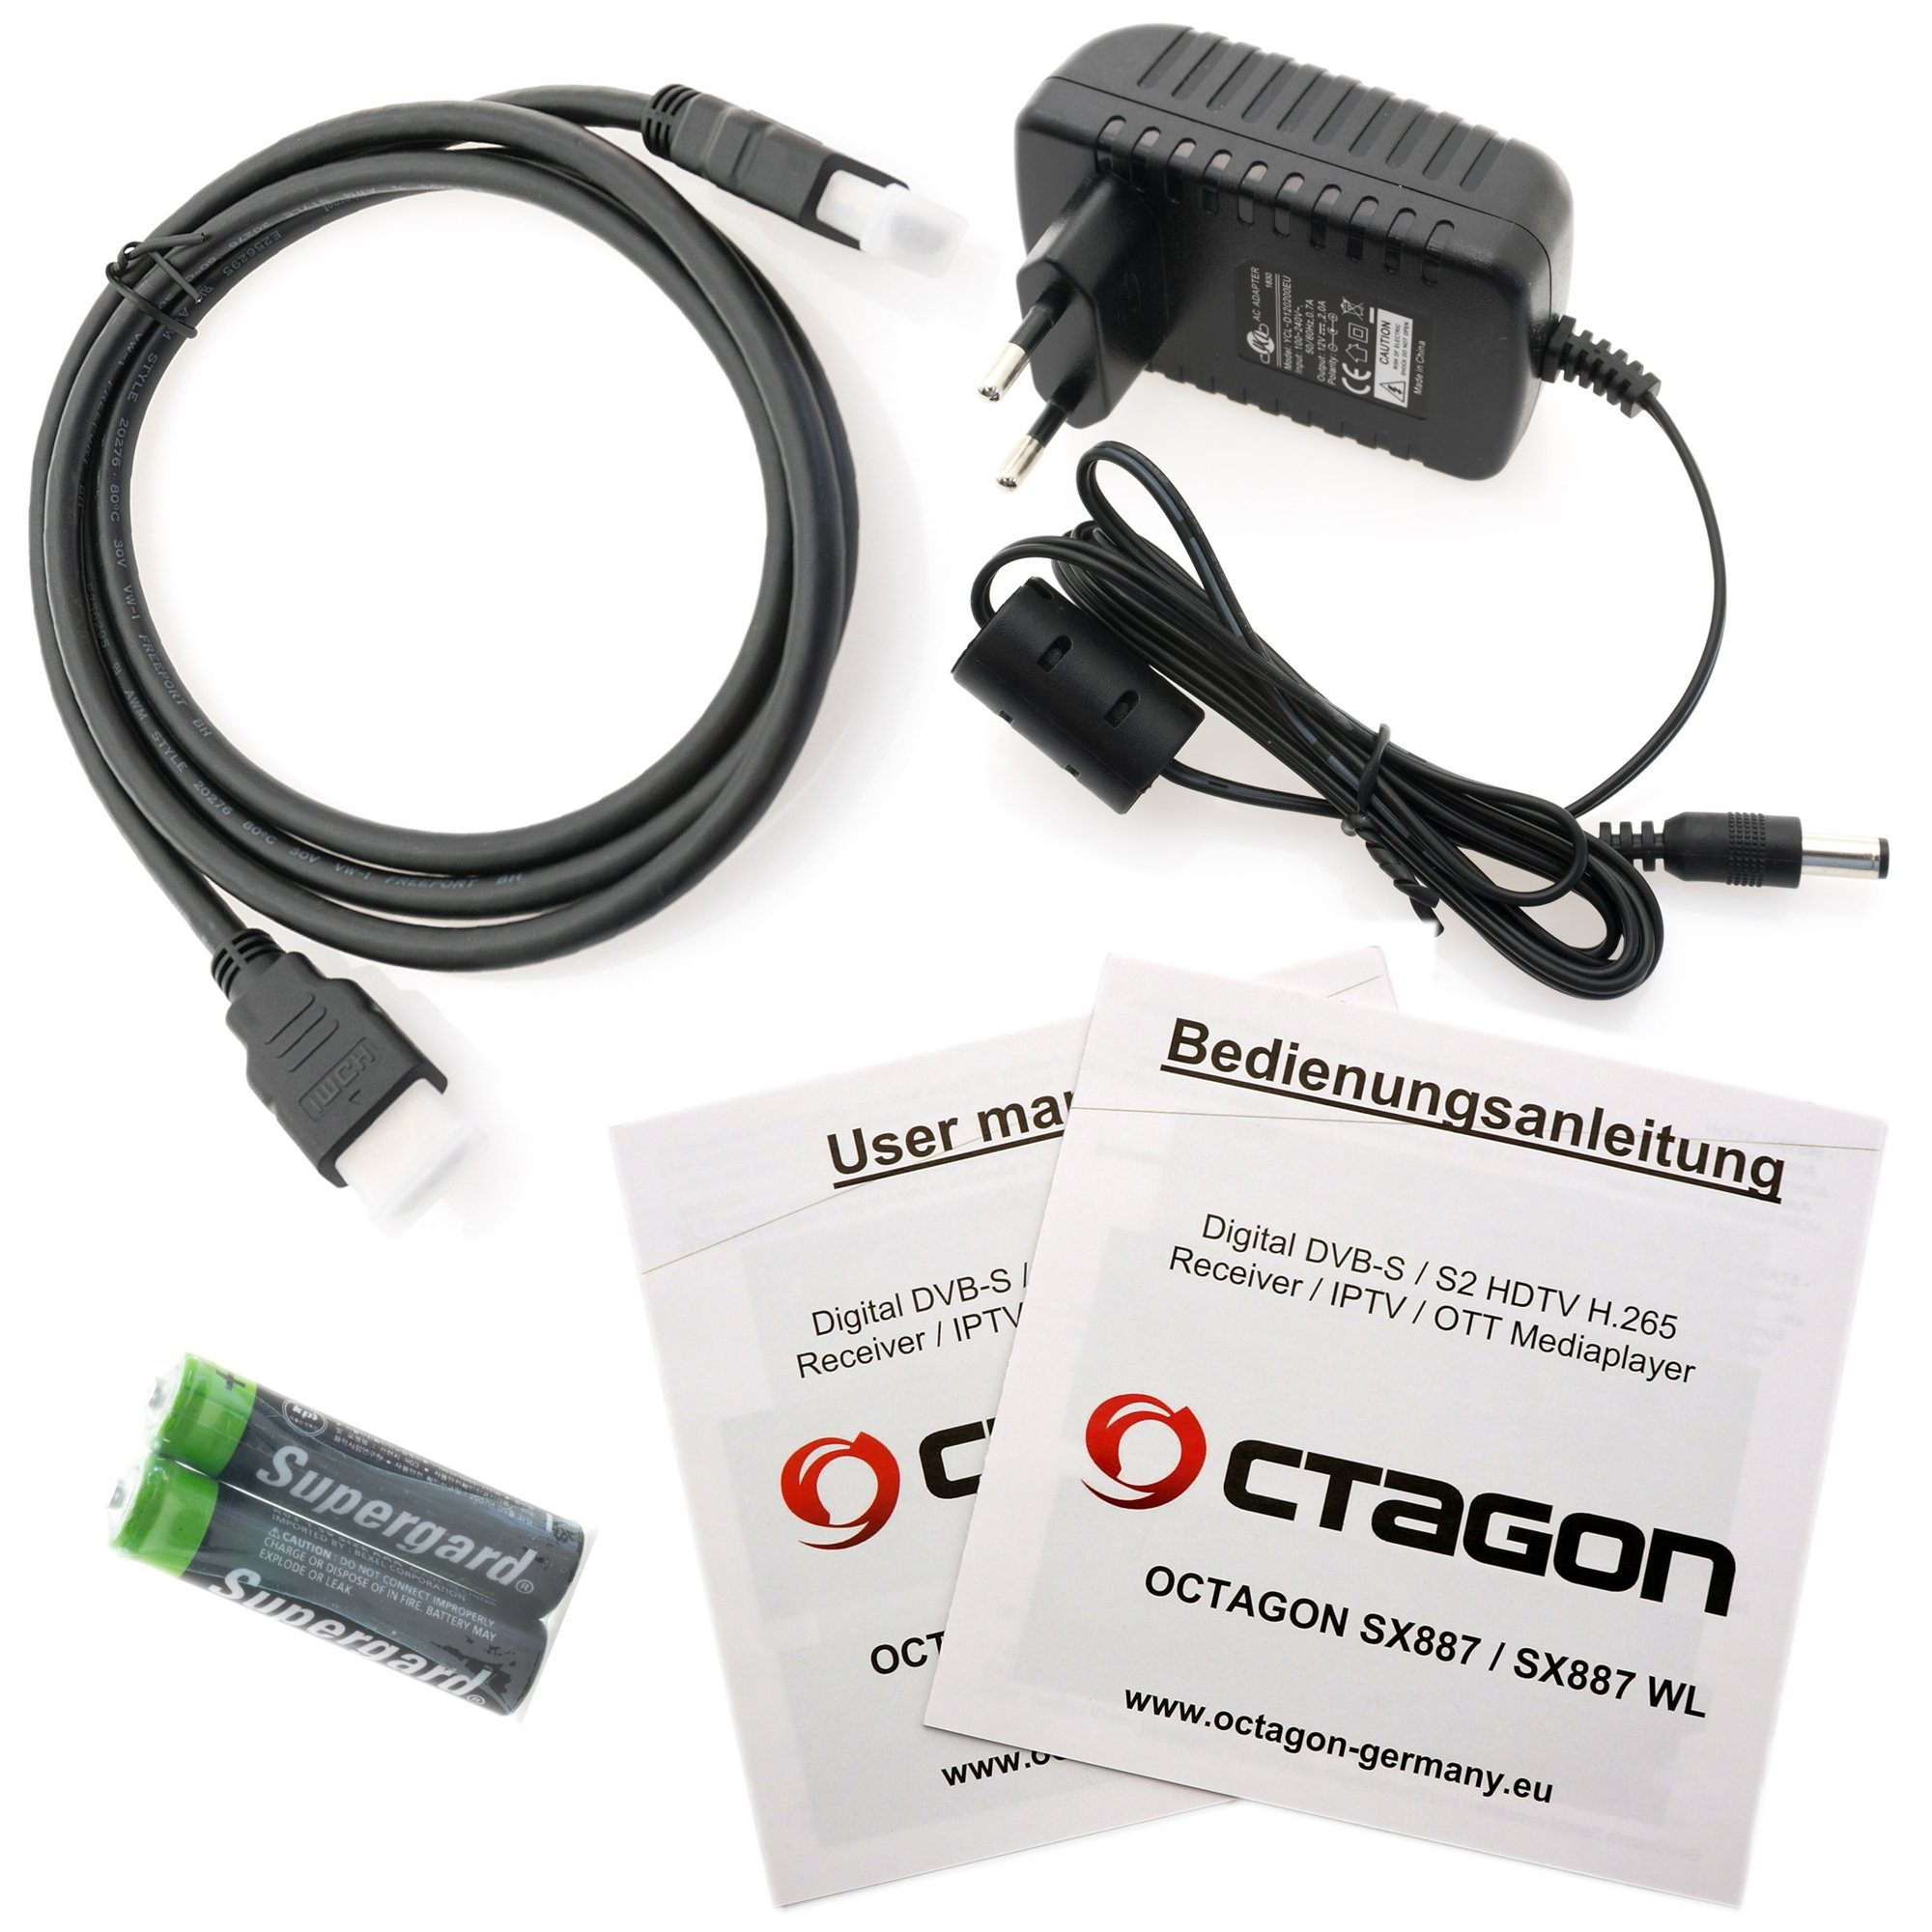 OCTAGON Streaming-Box SX887 HD H.265 Box HEVC IPTV Smart IP